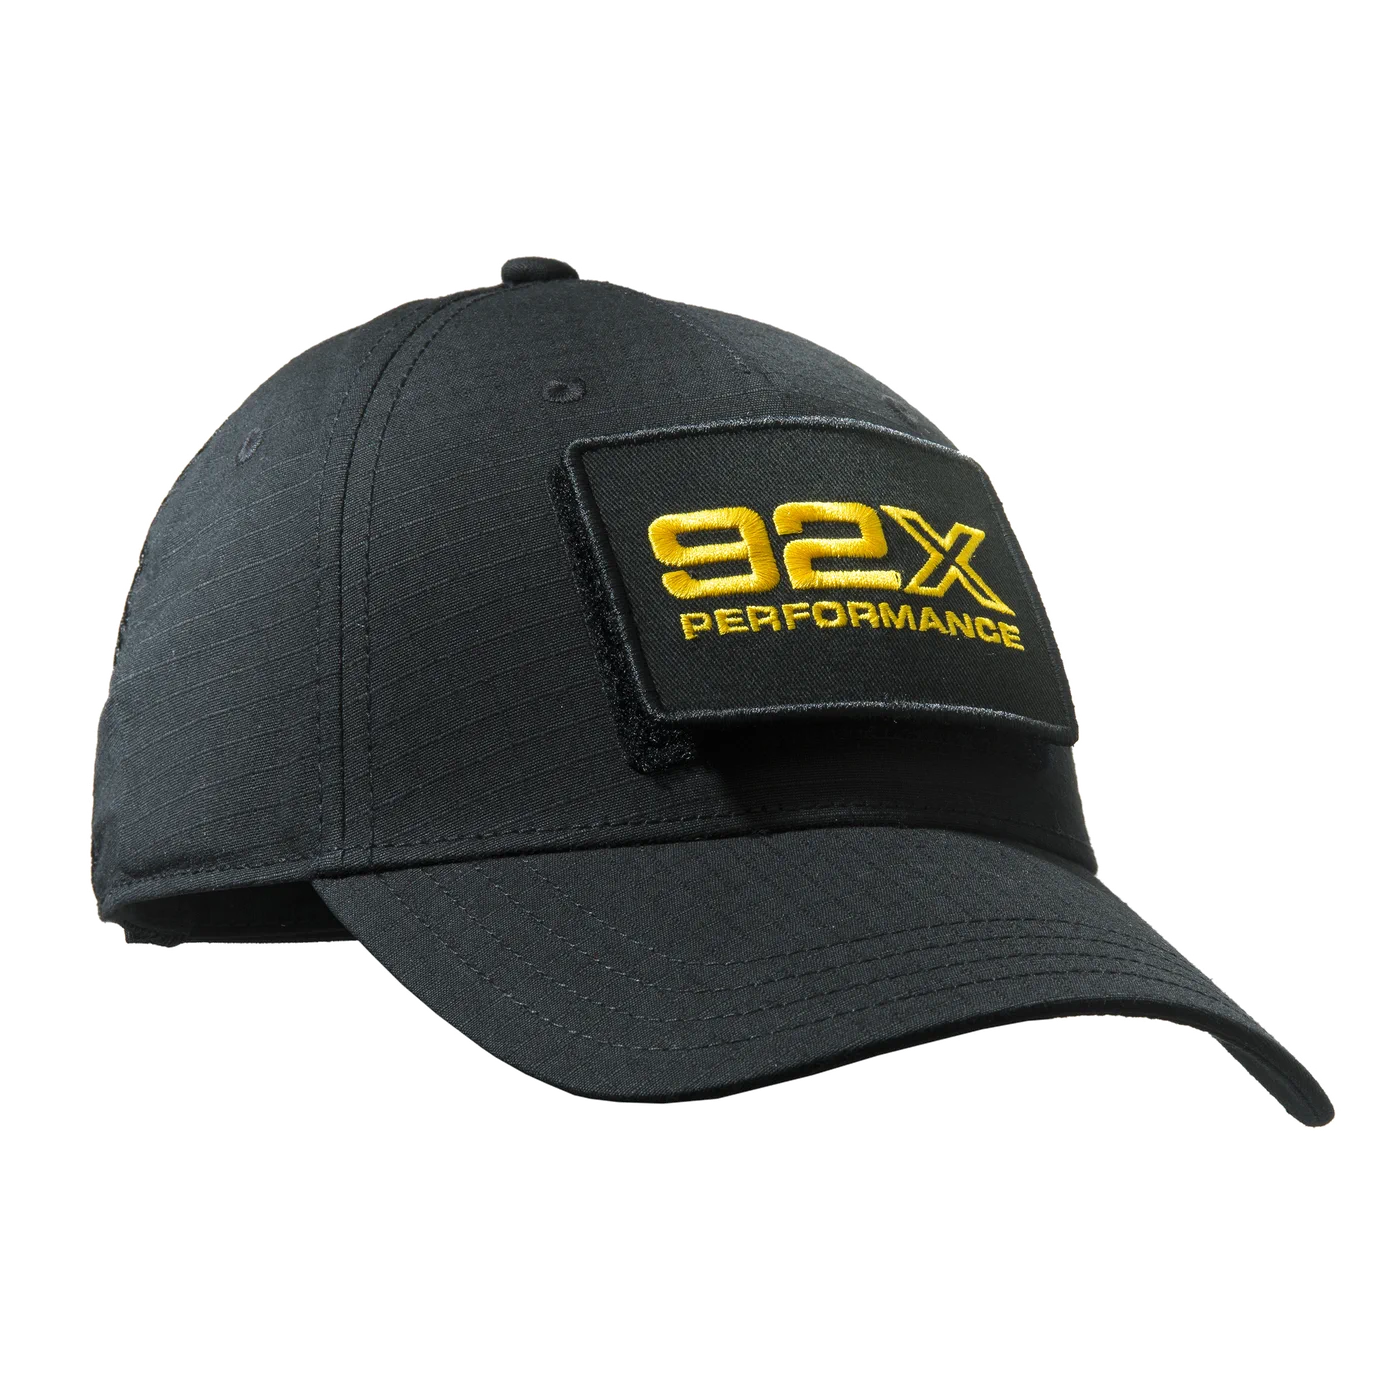 92X Performance Cap | Beretta